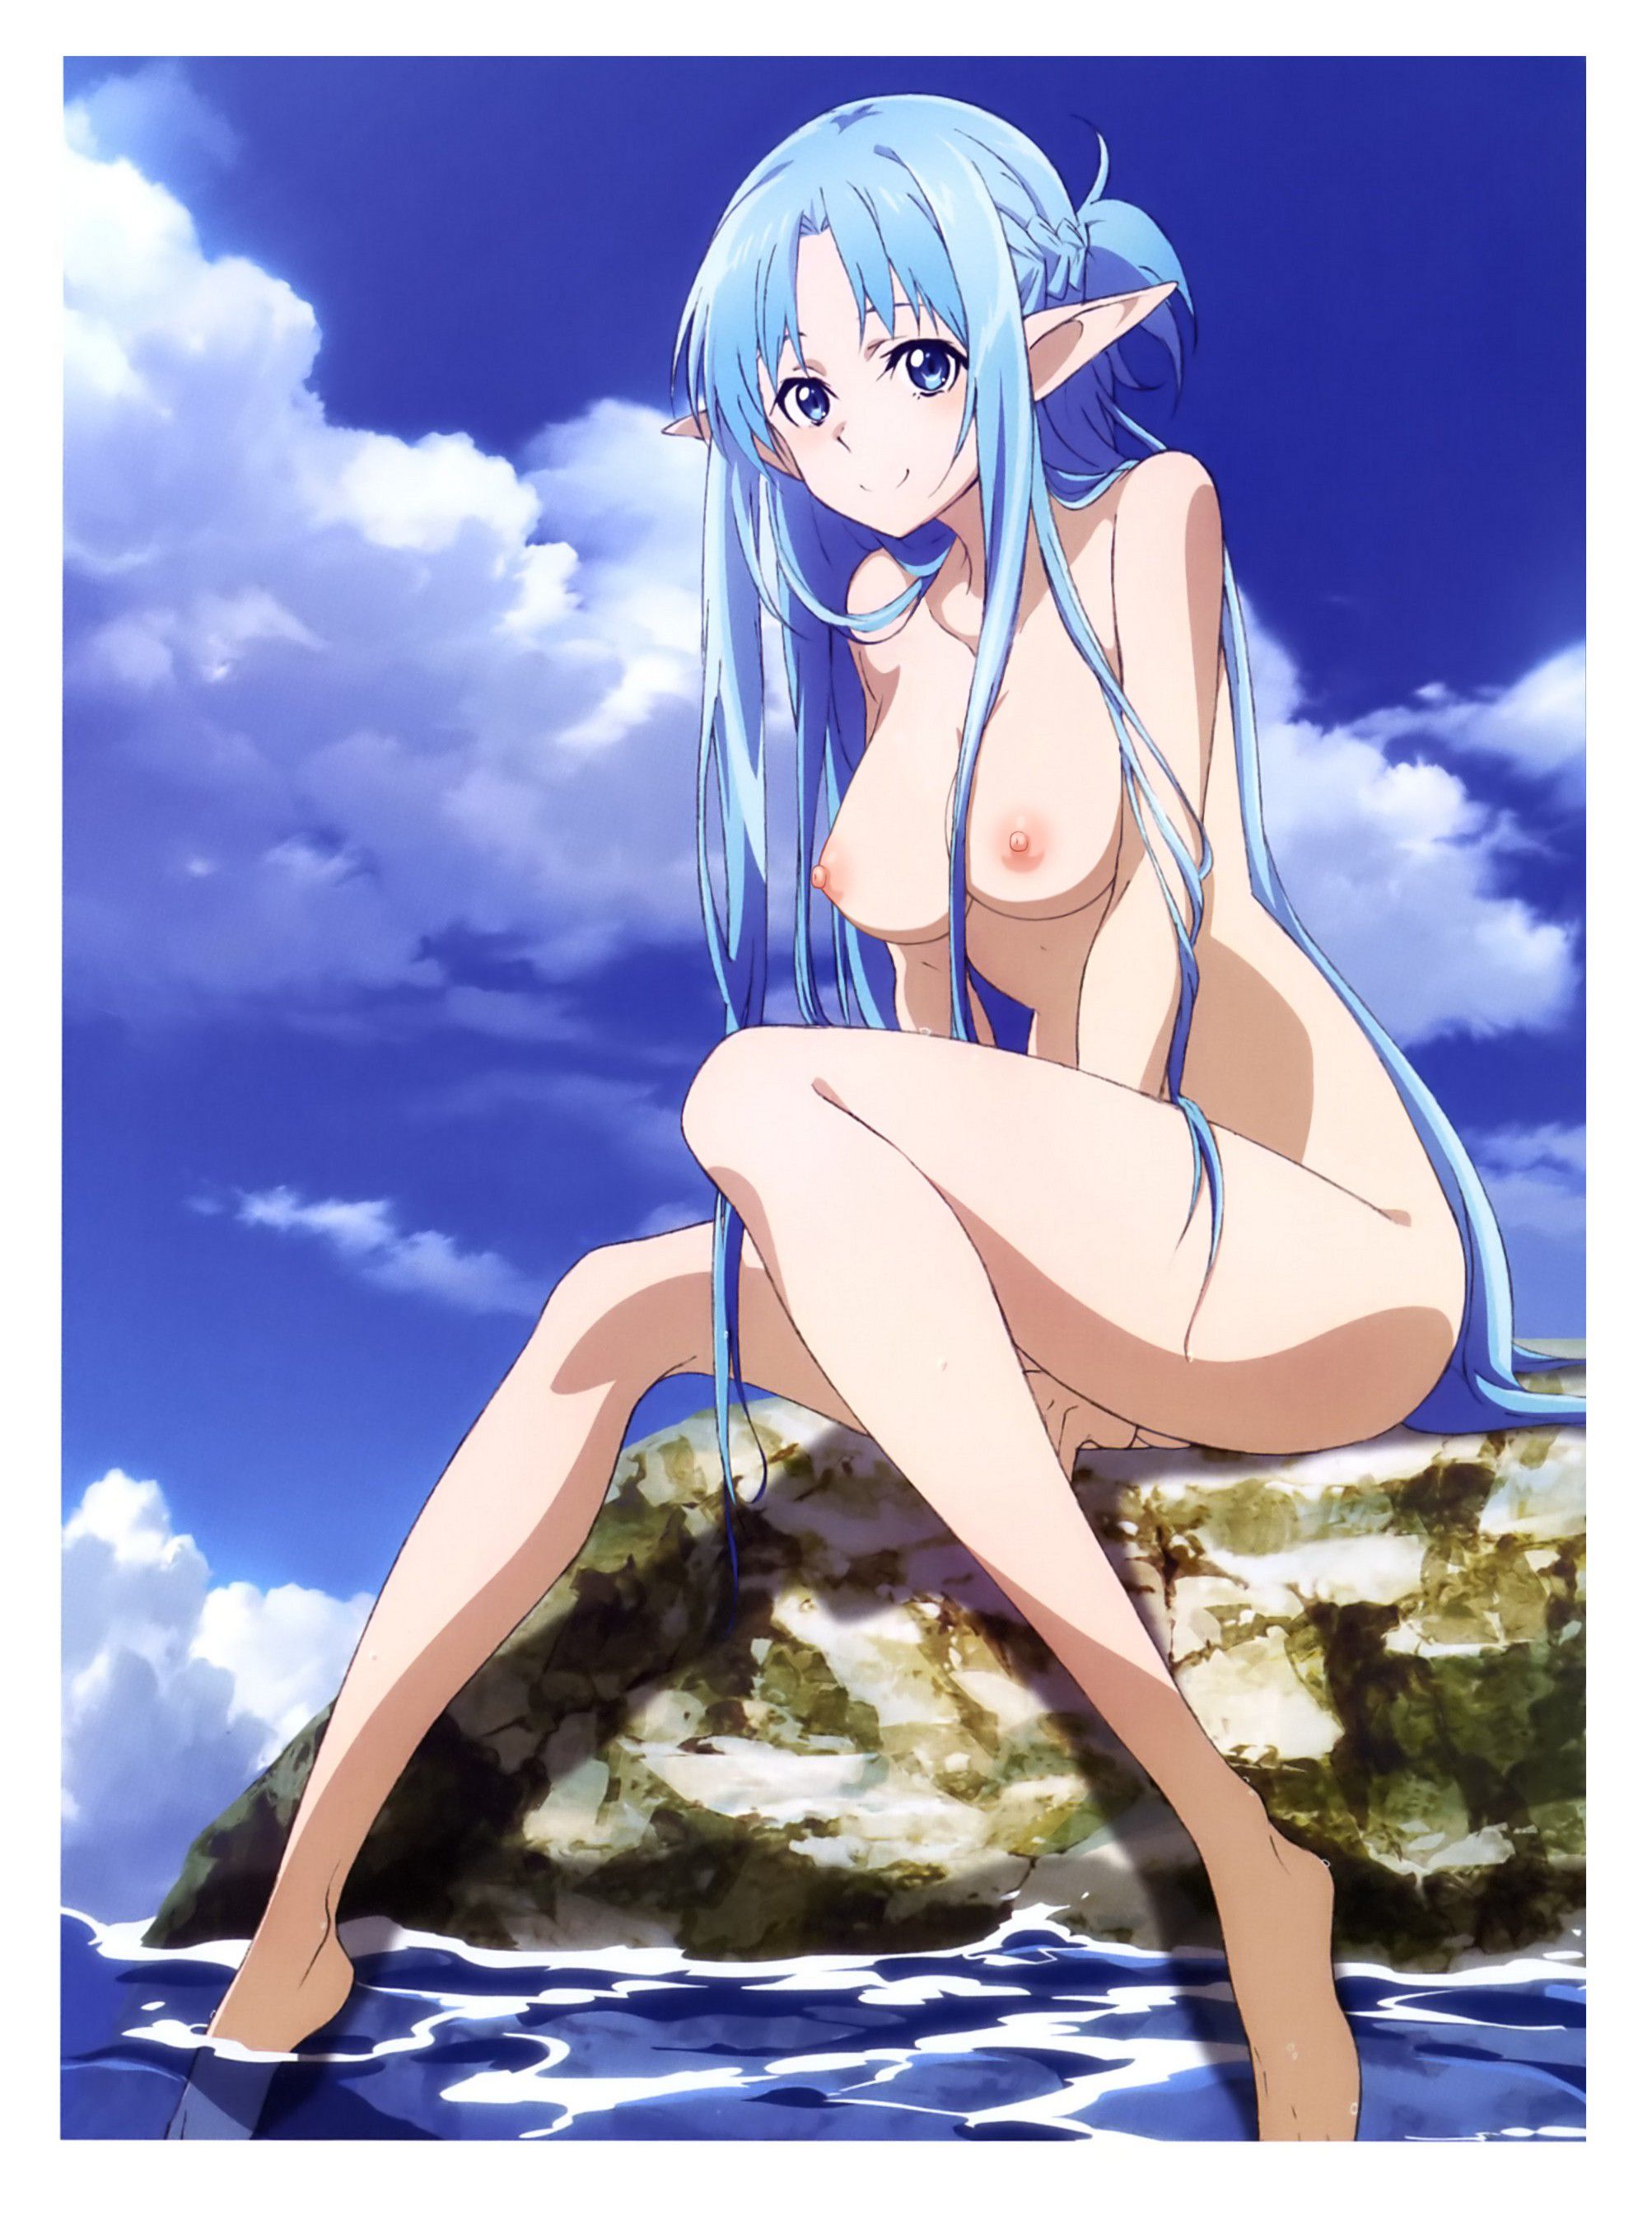 【Secondary Erotic】Sword Art Online SAO Asuna's Erotic Image Summary [30 Photos] 31